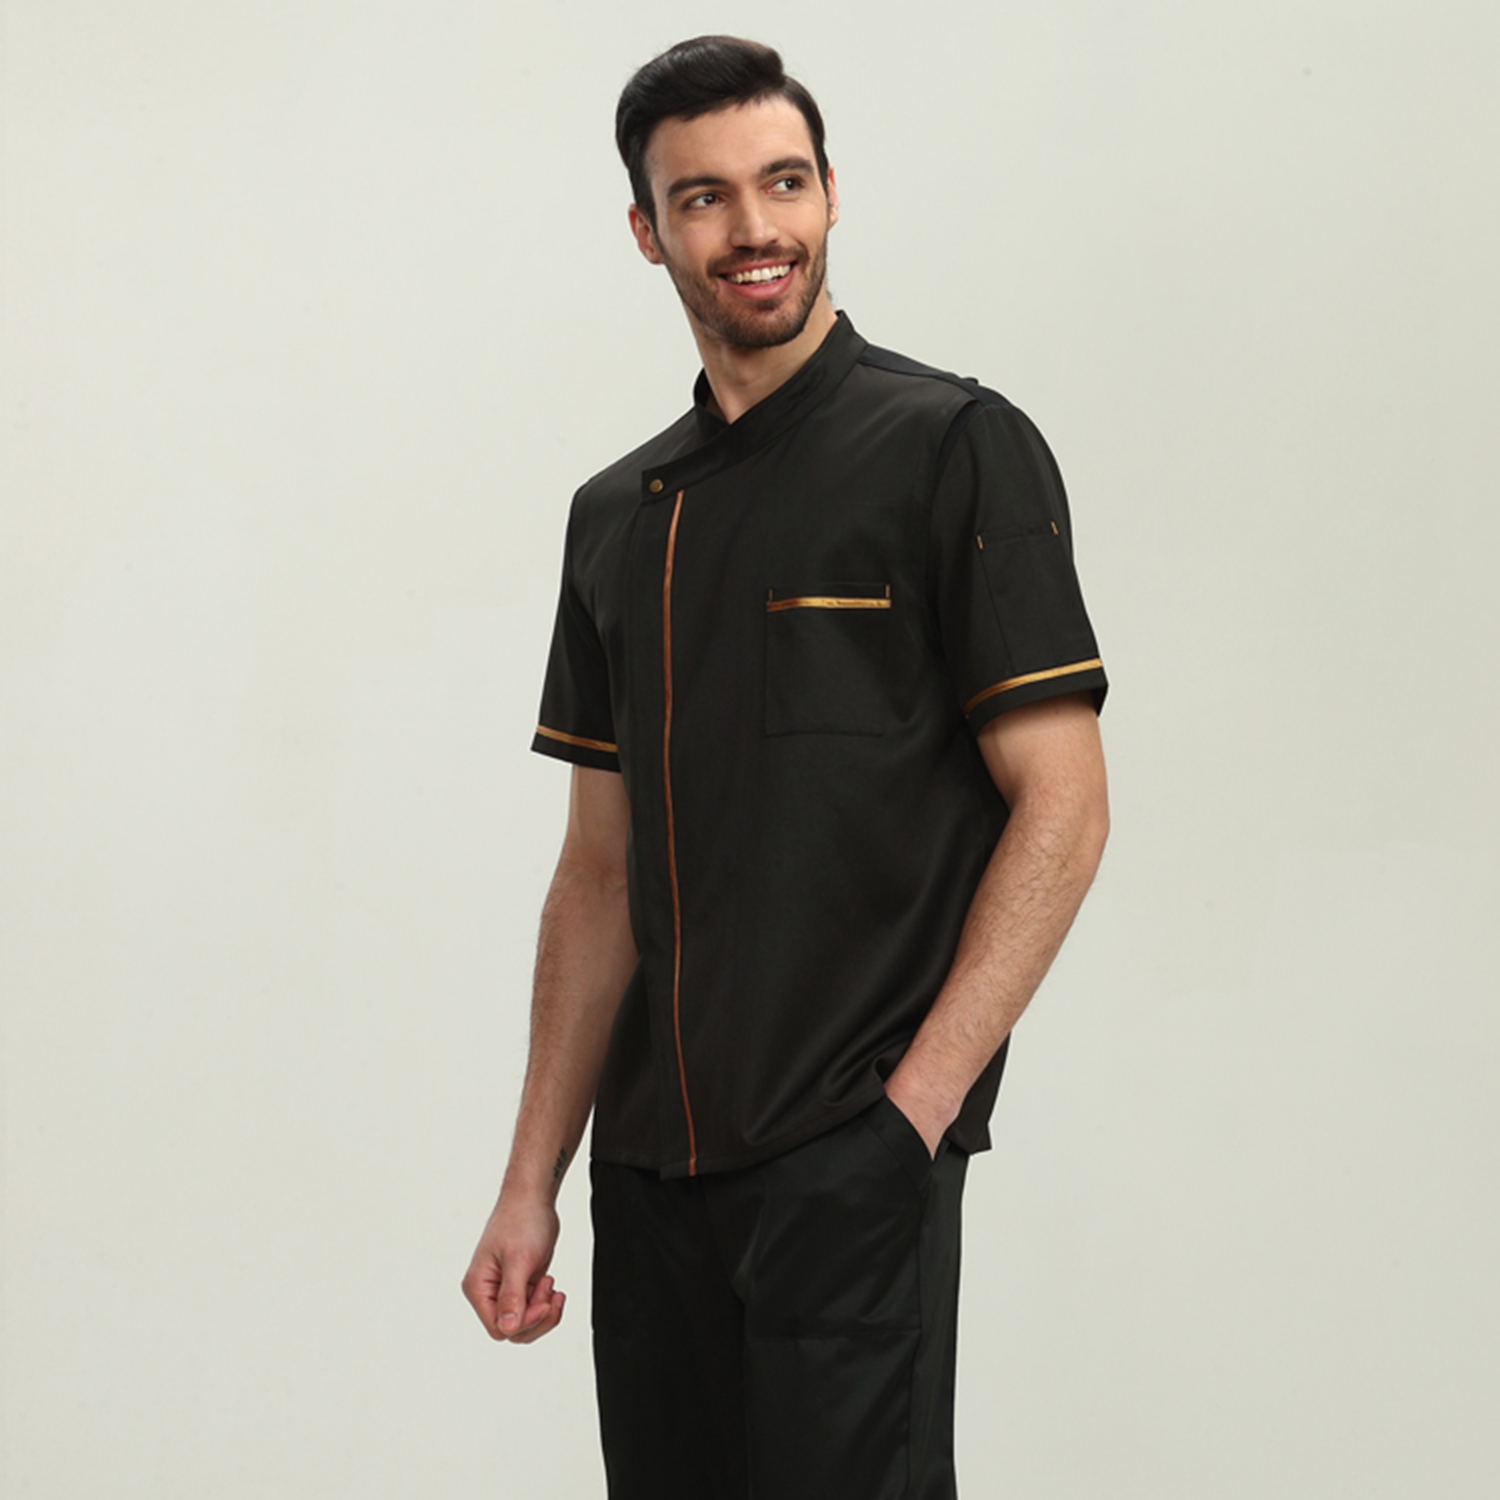 Summer breathable restaurant uniforms shirts men plus size 5XL free logo custom hotel chef uniform